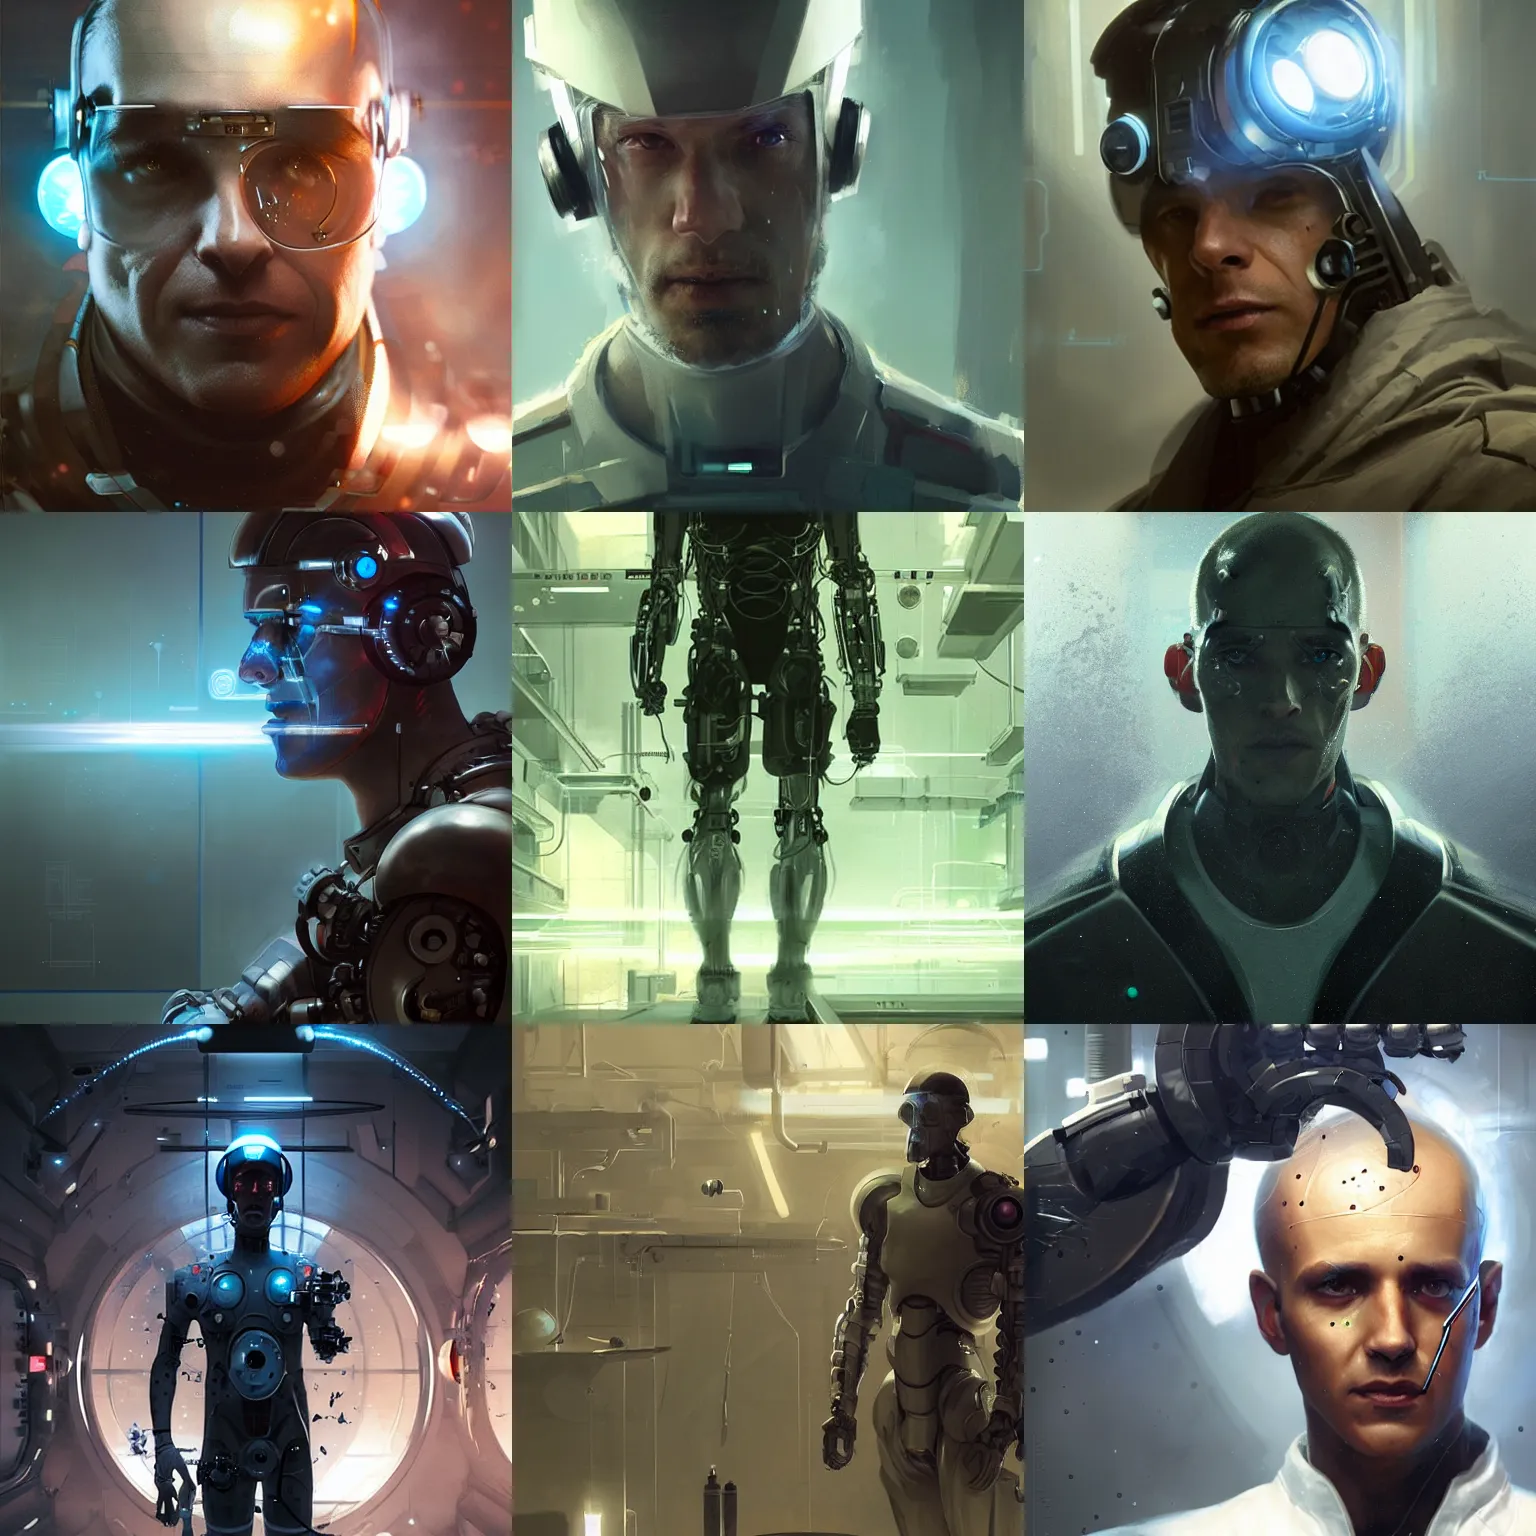 Prompt: a laboratory operator man with cybernetic enhancements, futuristic gear, scifi character portrait by greg rutkowski, craig mullins, cinematic lighting